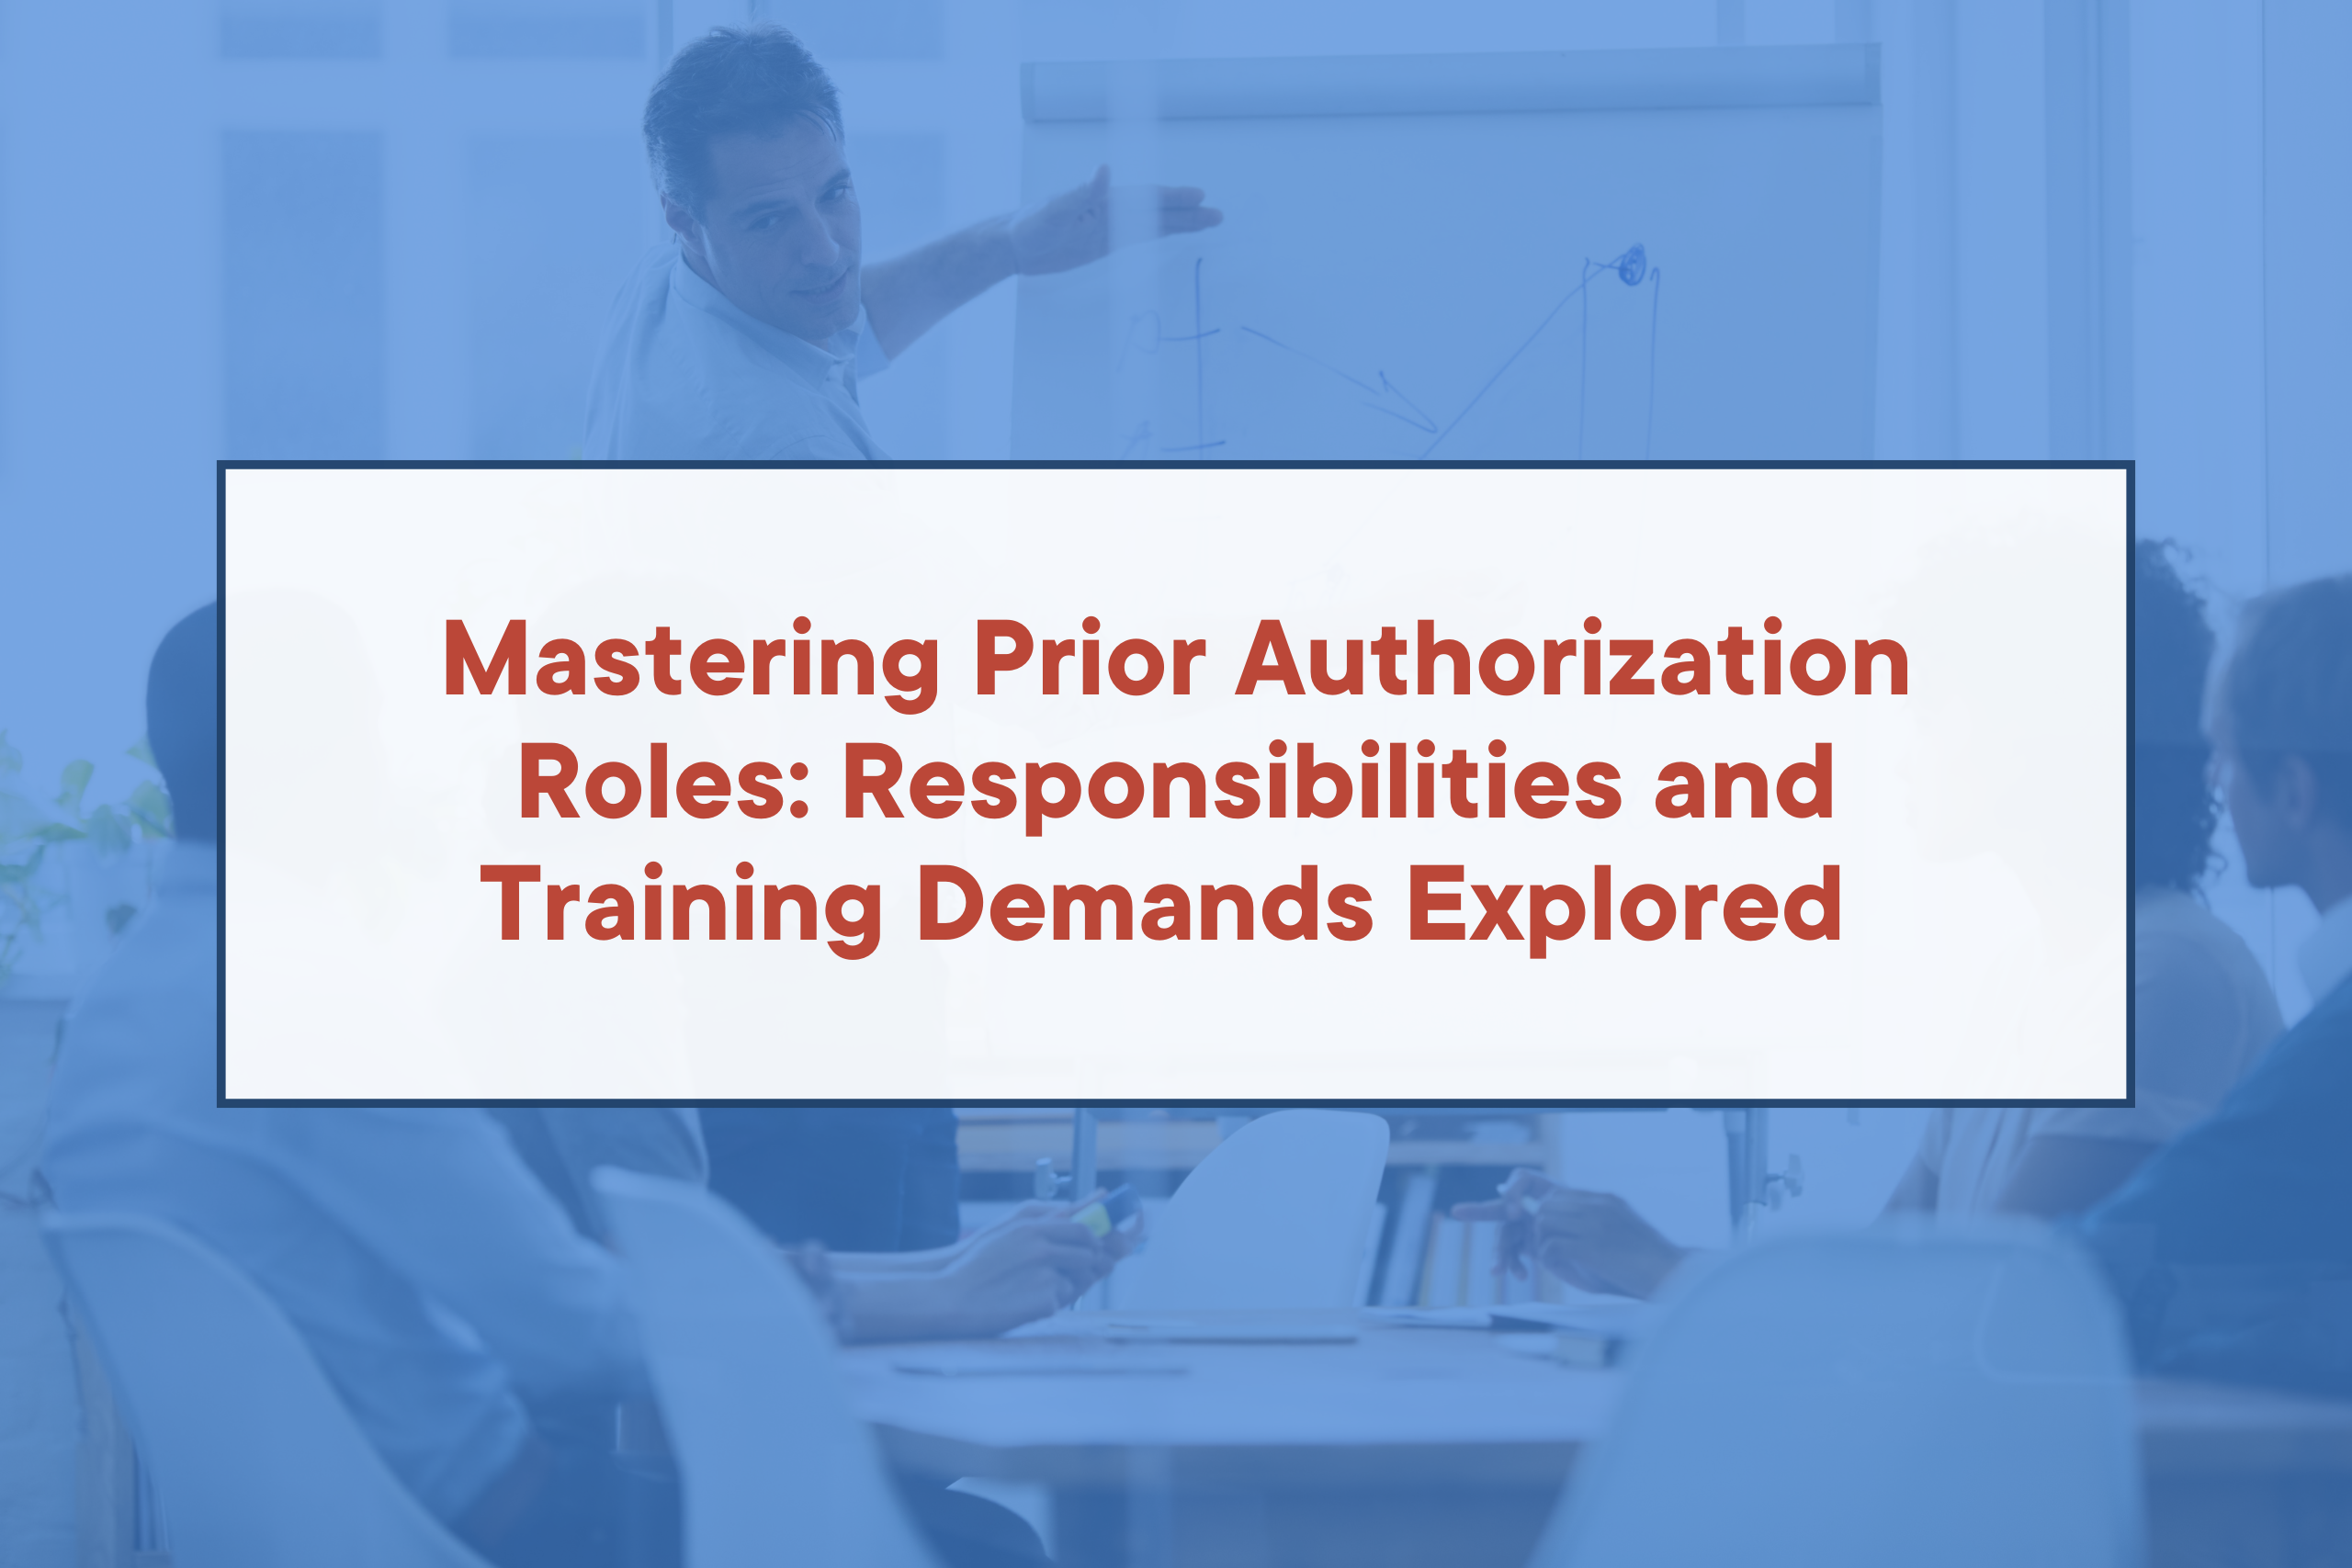 Mastering Prior Authorization Roles: Responsibilities and Training Demands Explored